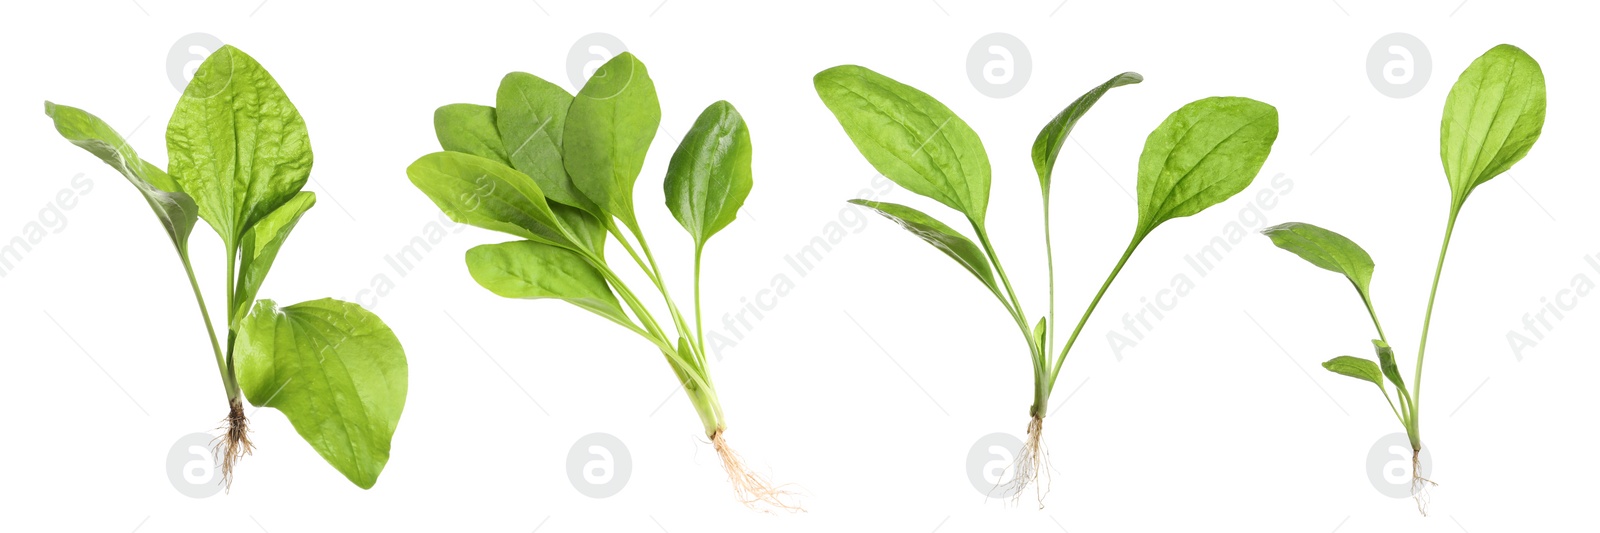 Image of Set with fresh broadleaf plantain plants on white background. Banner design